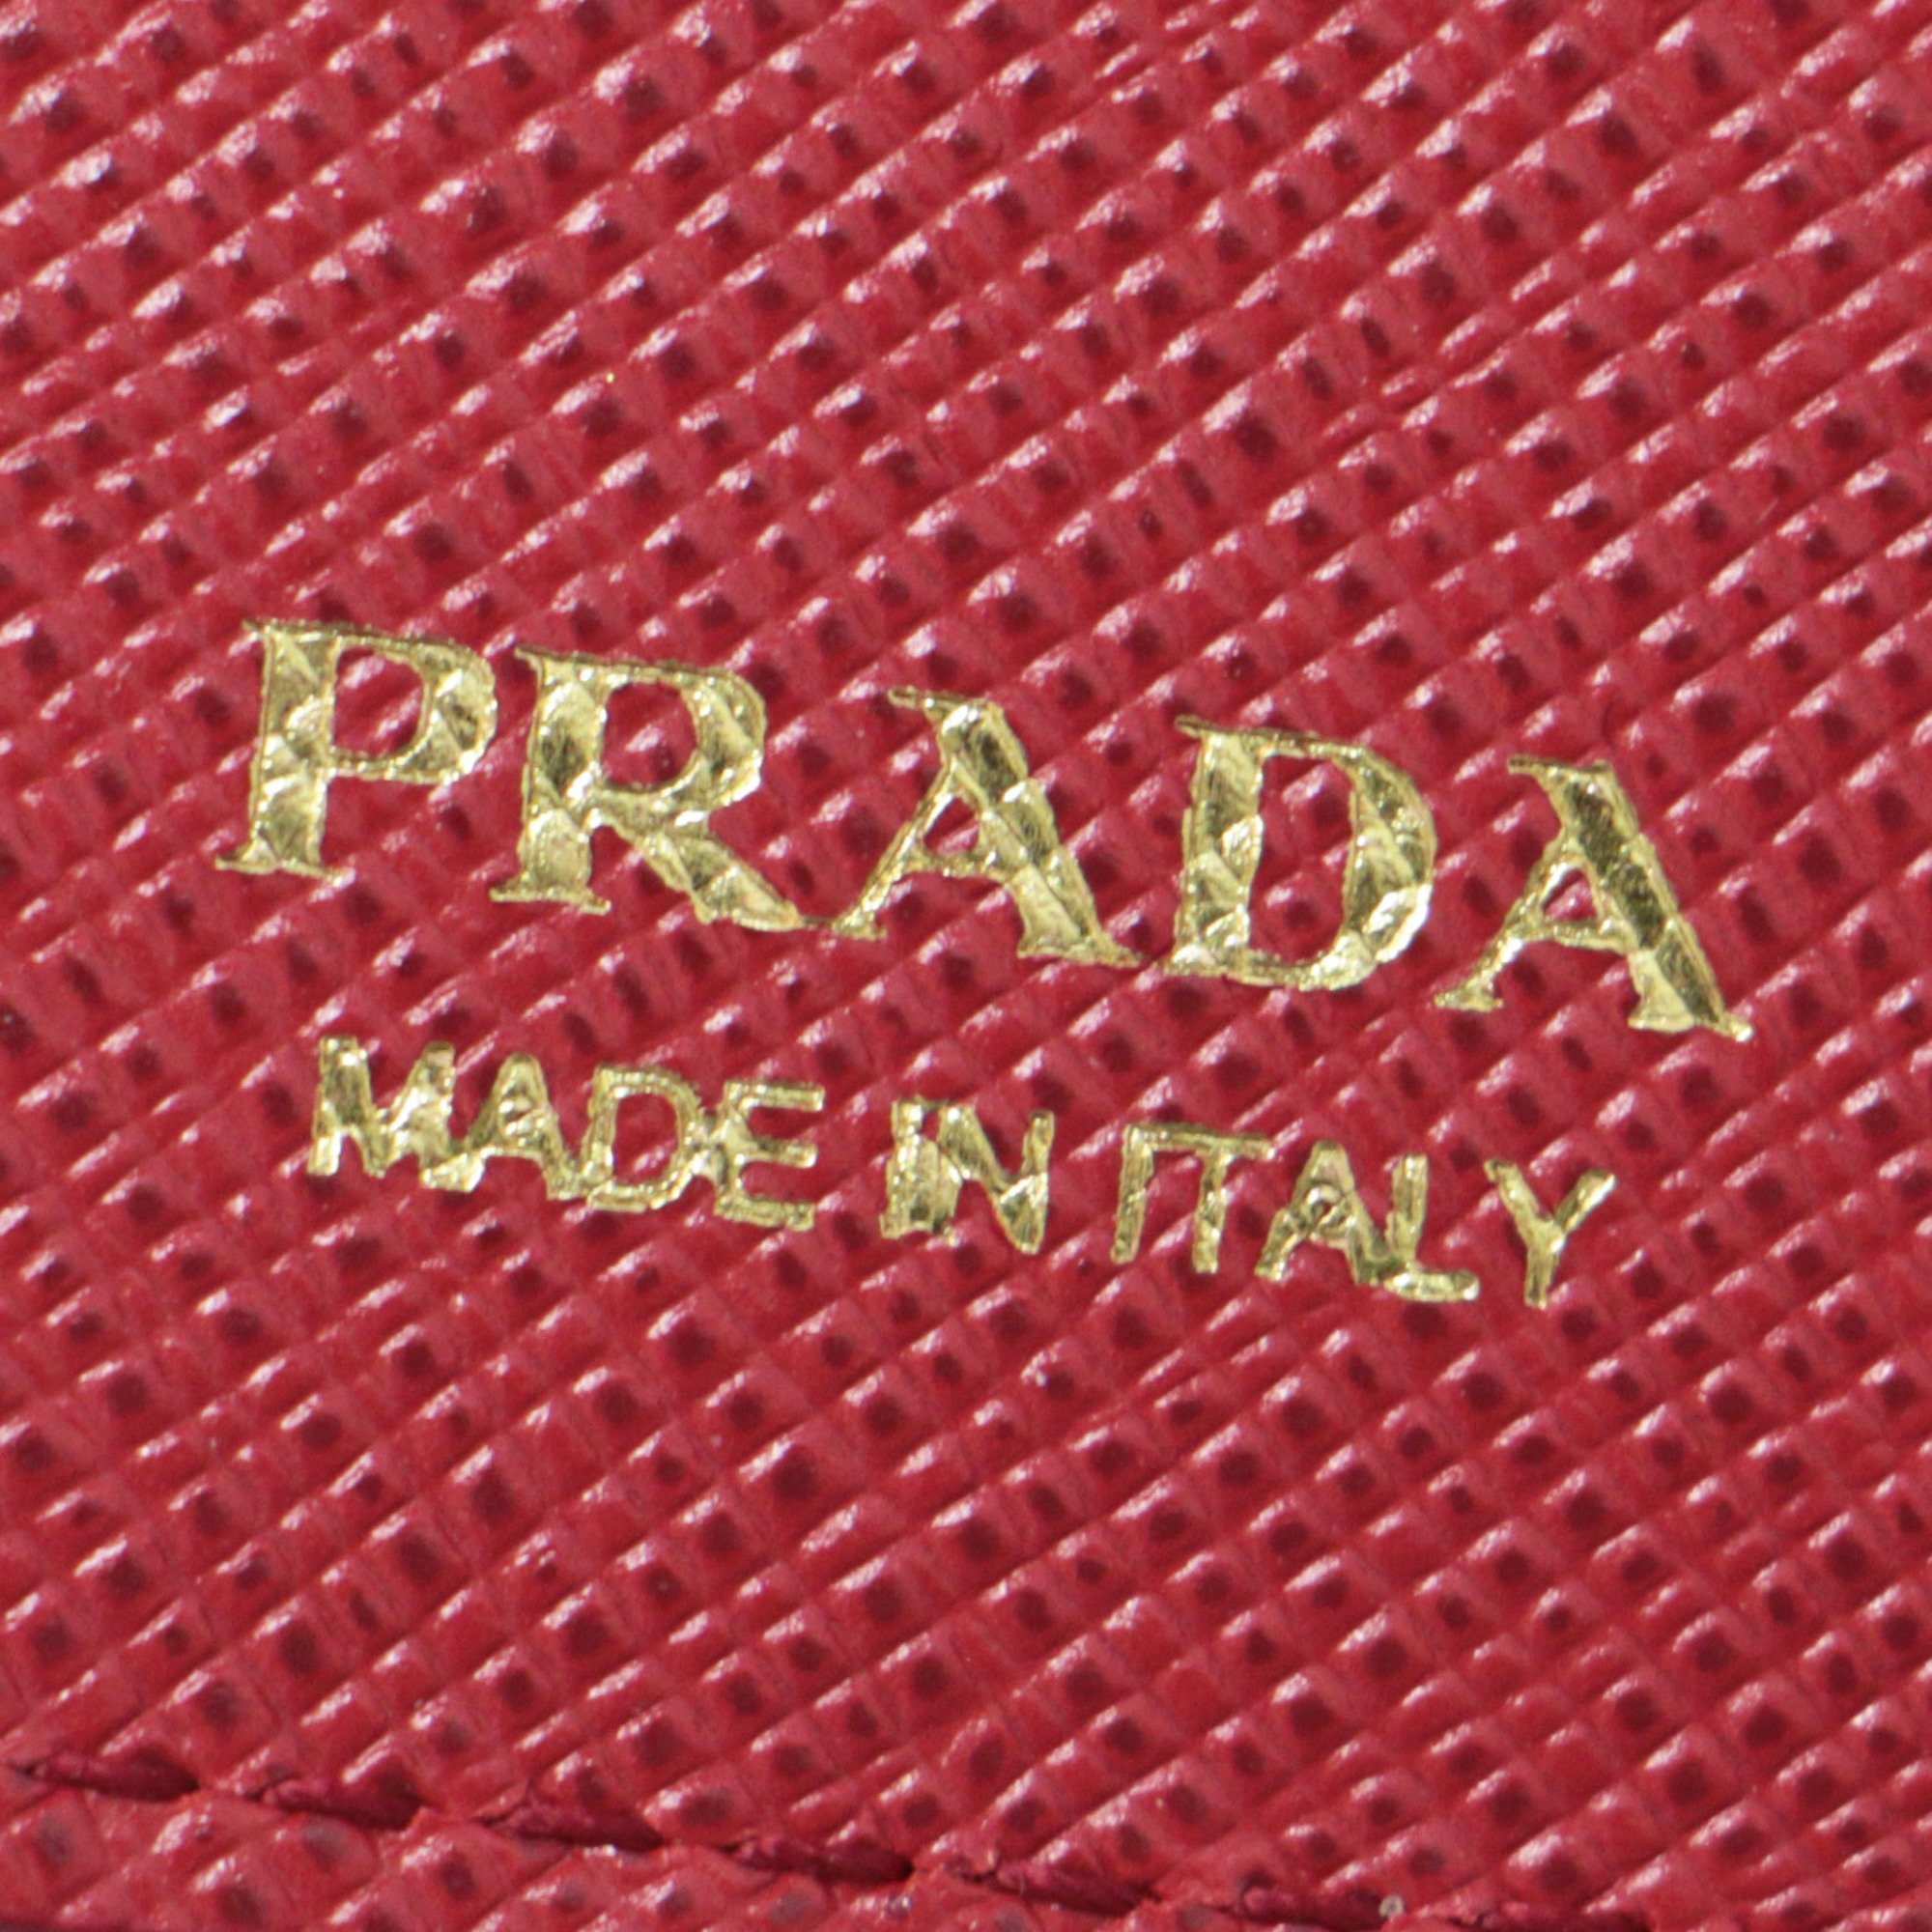 PRADA Prada Wallet Bifold Red Compact Logo Saffiano 1MV204 Elegant